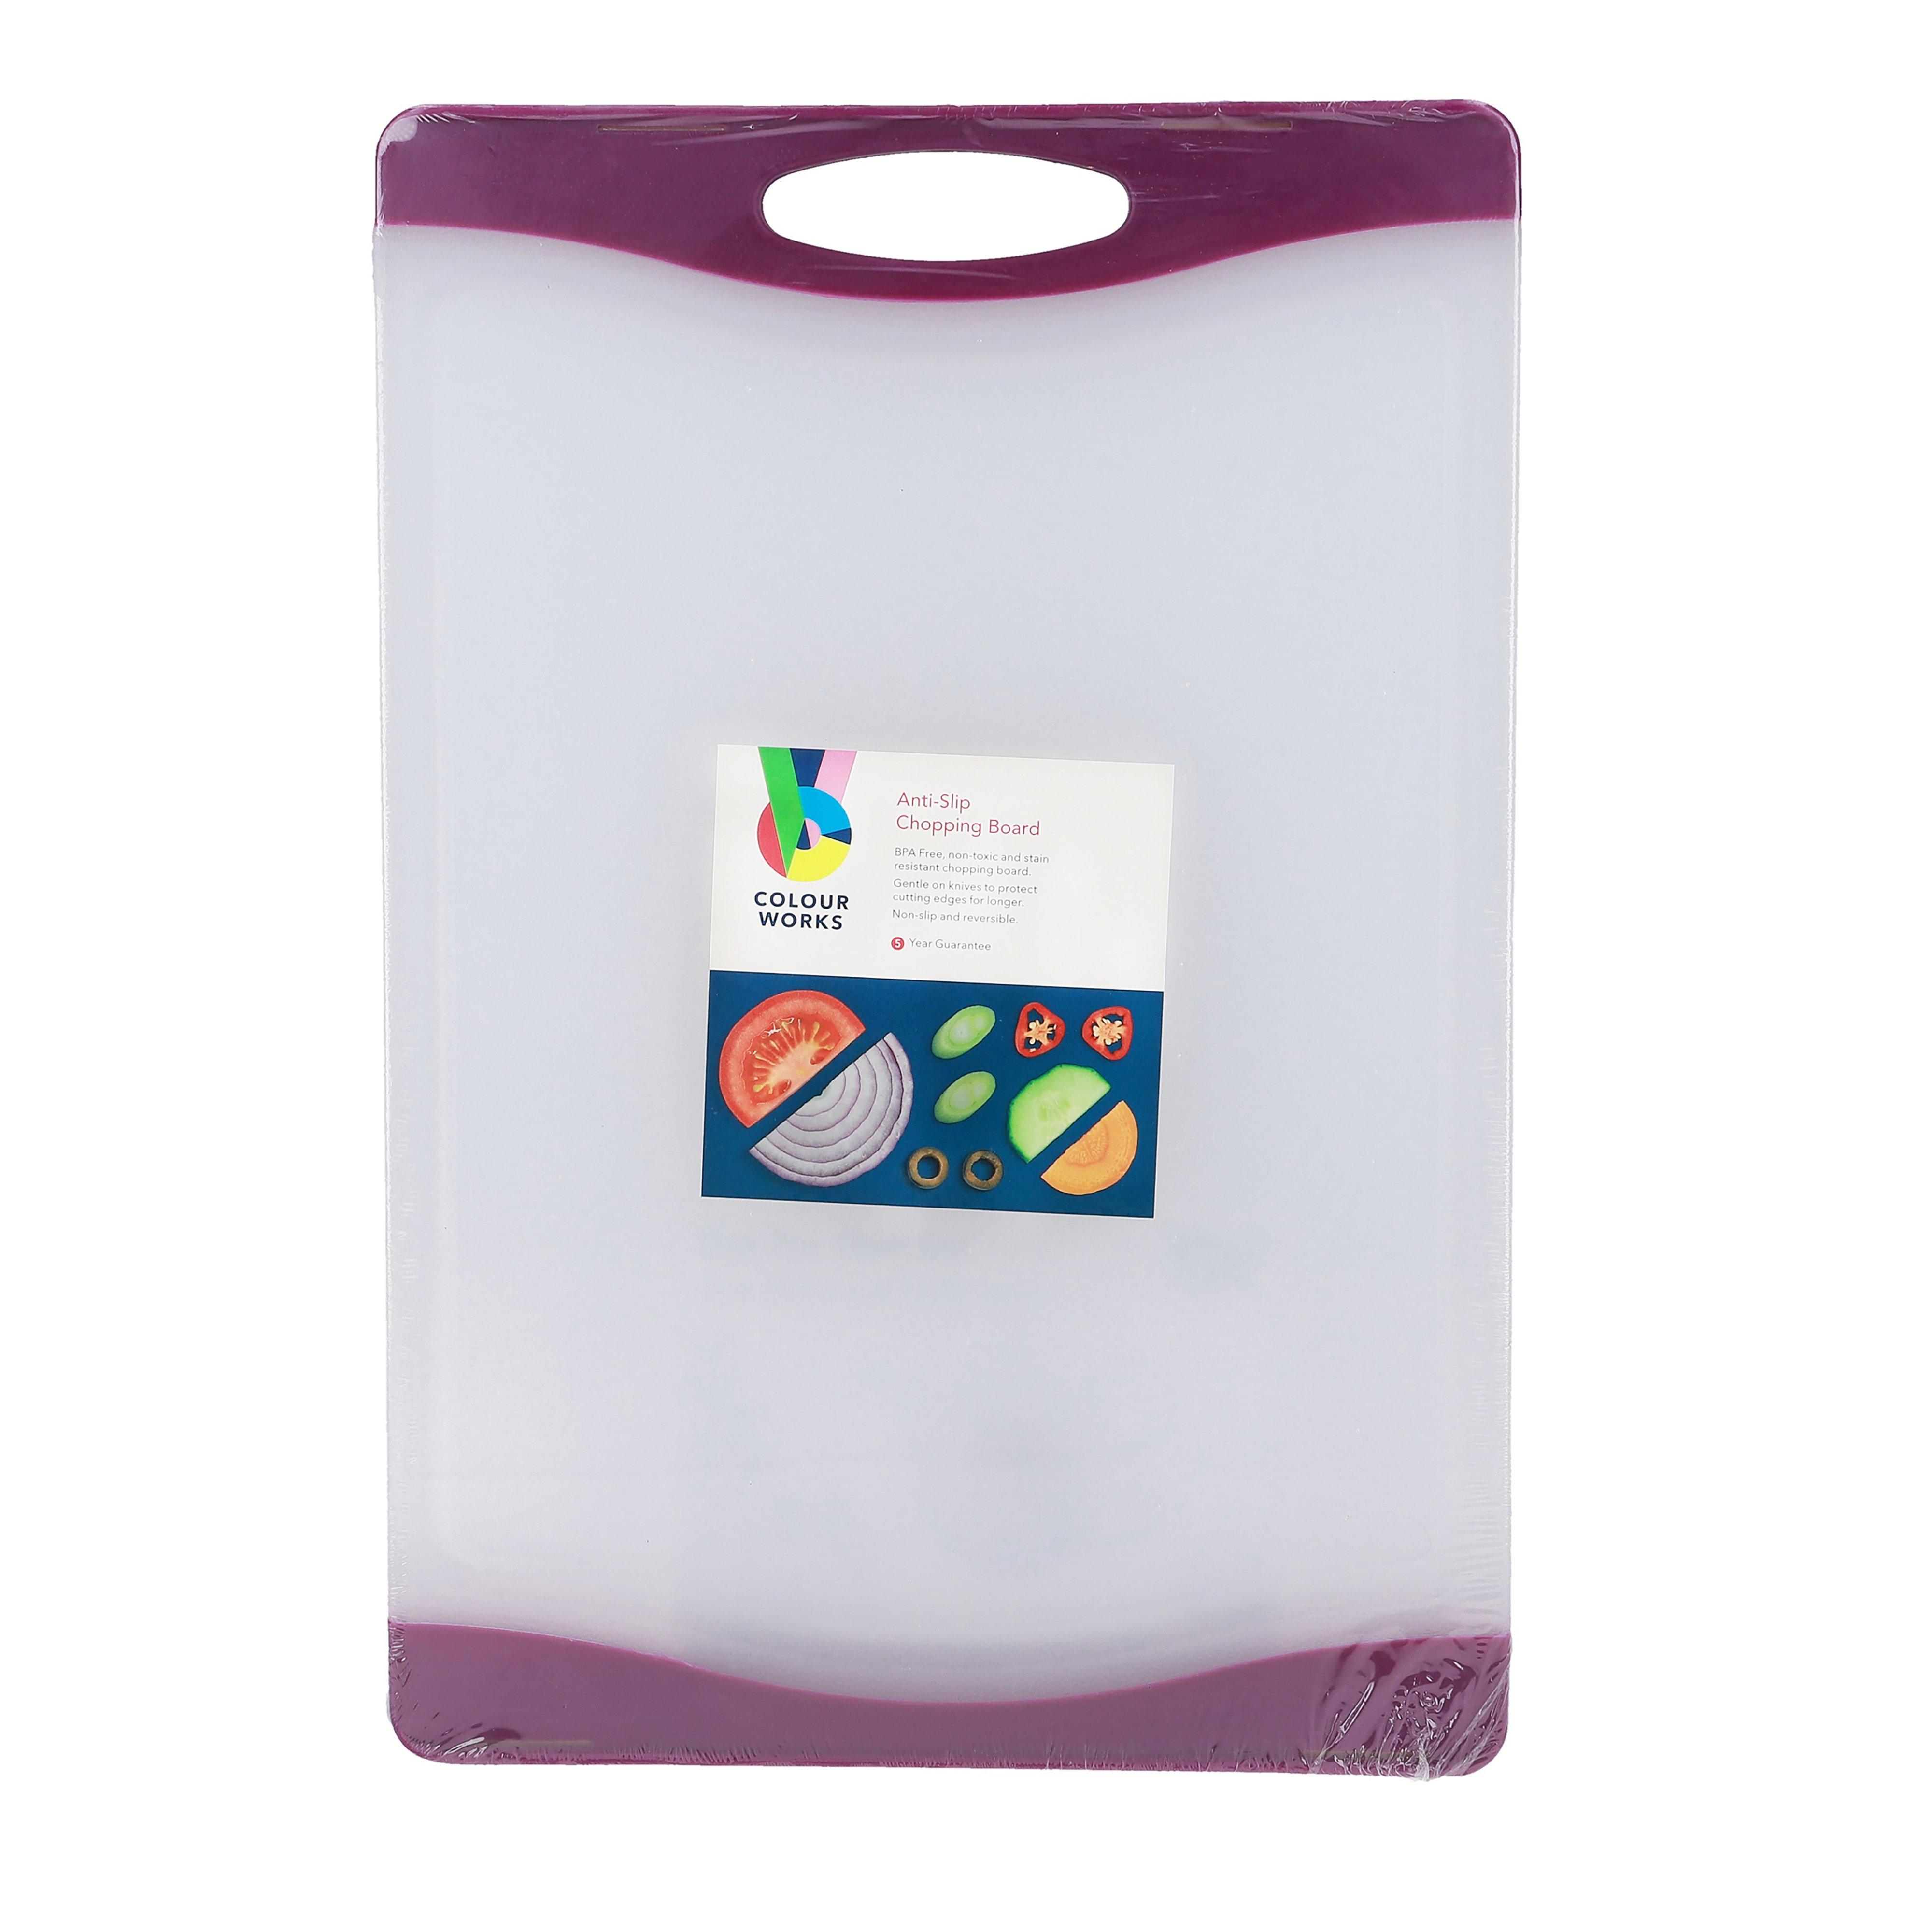 Purple Durable Plastic Cutting Board